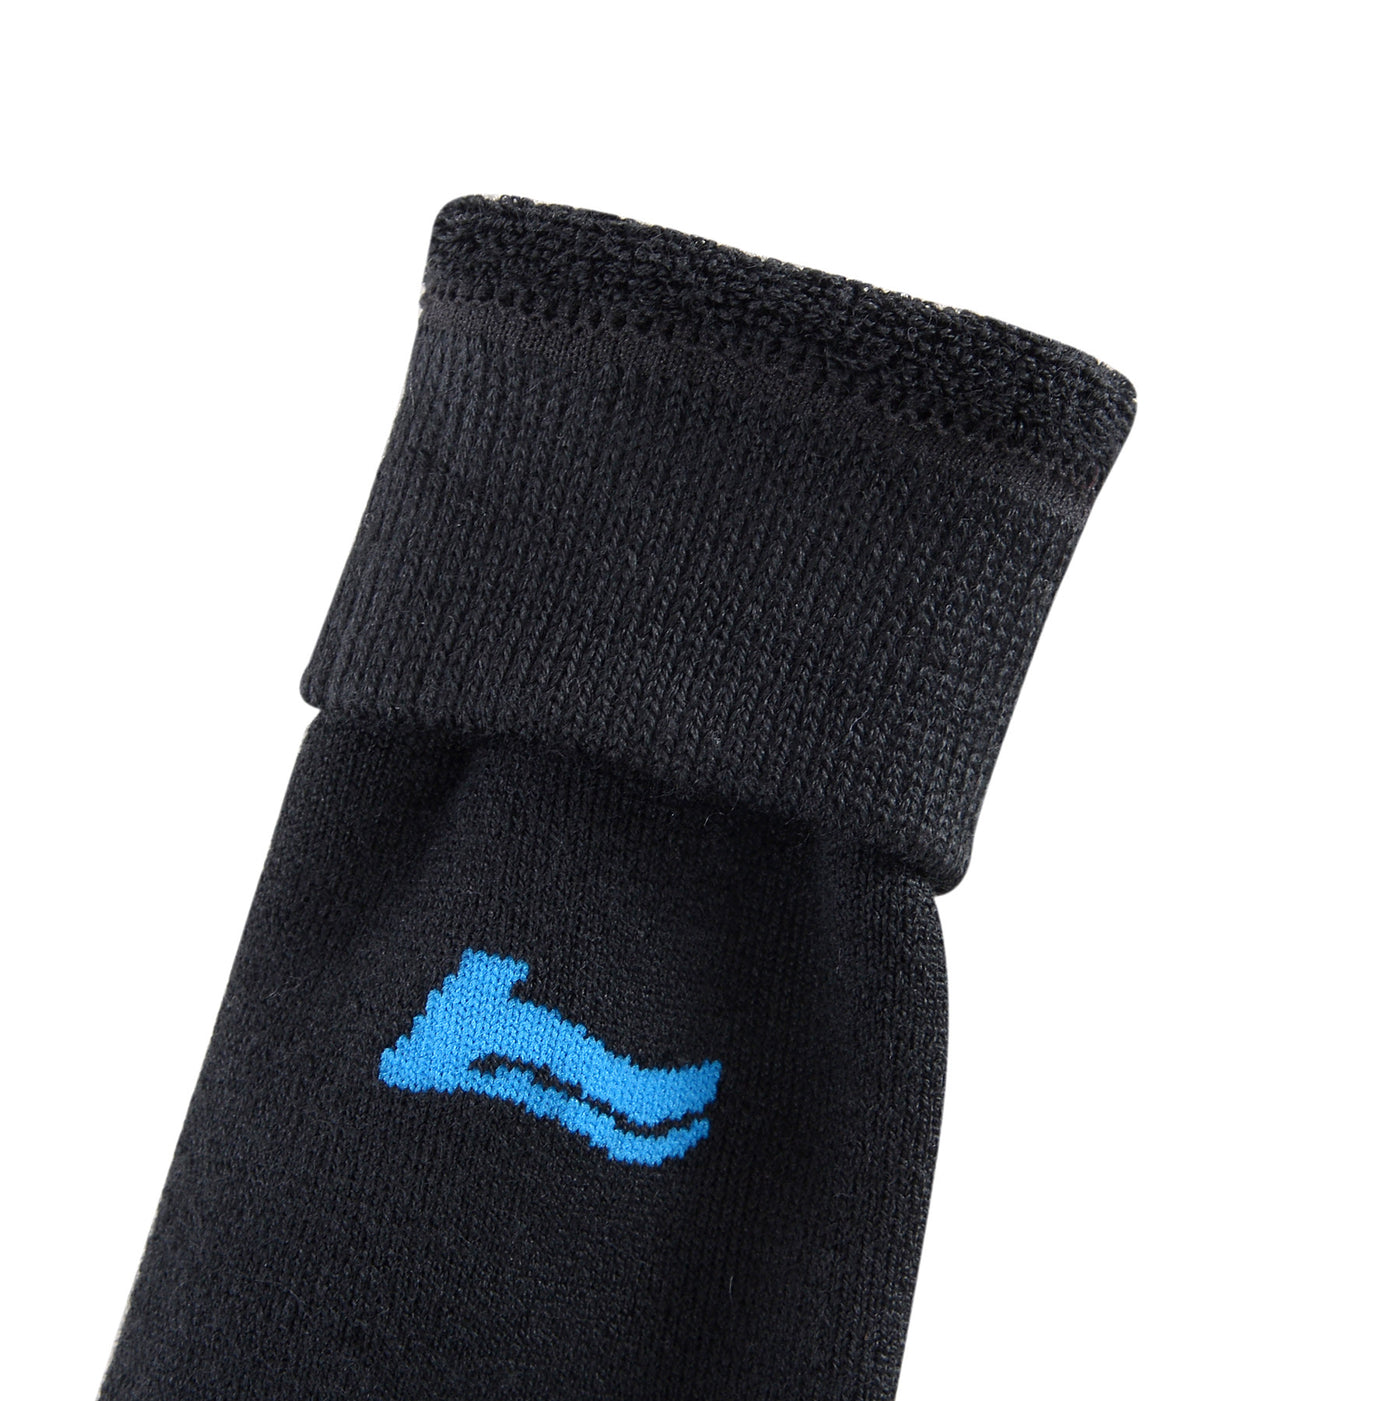 Laulax 2 Pairs High Quality Merino Wool Men's Ski Socks, Size UK 7 - 11 / Europe 40 - 46, Gift Set, Black, Burgundy